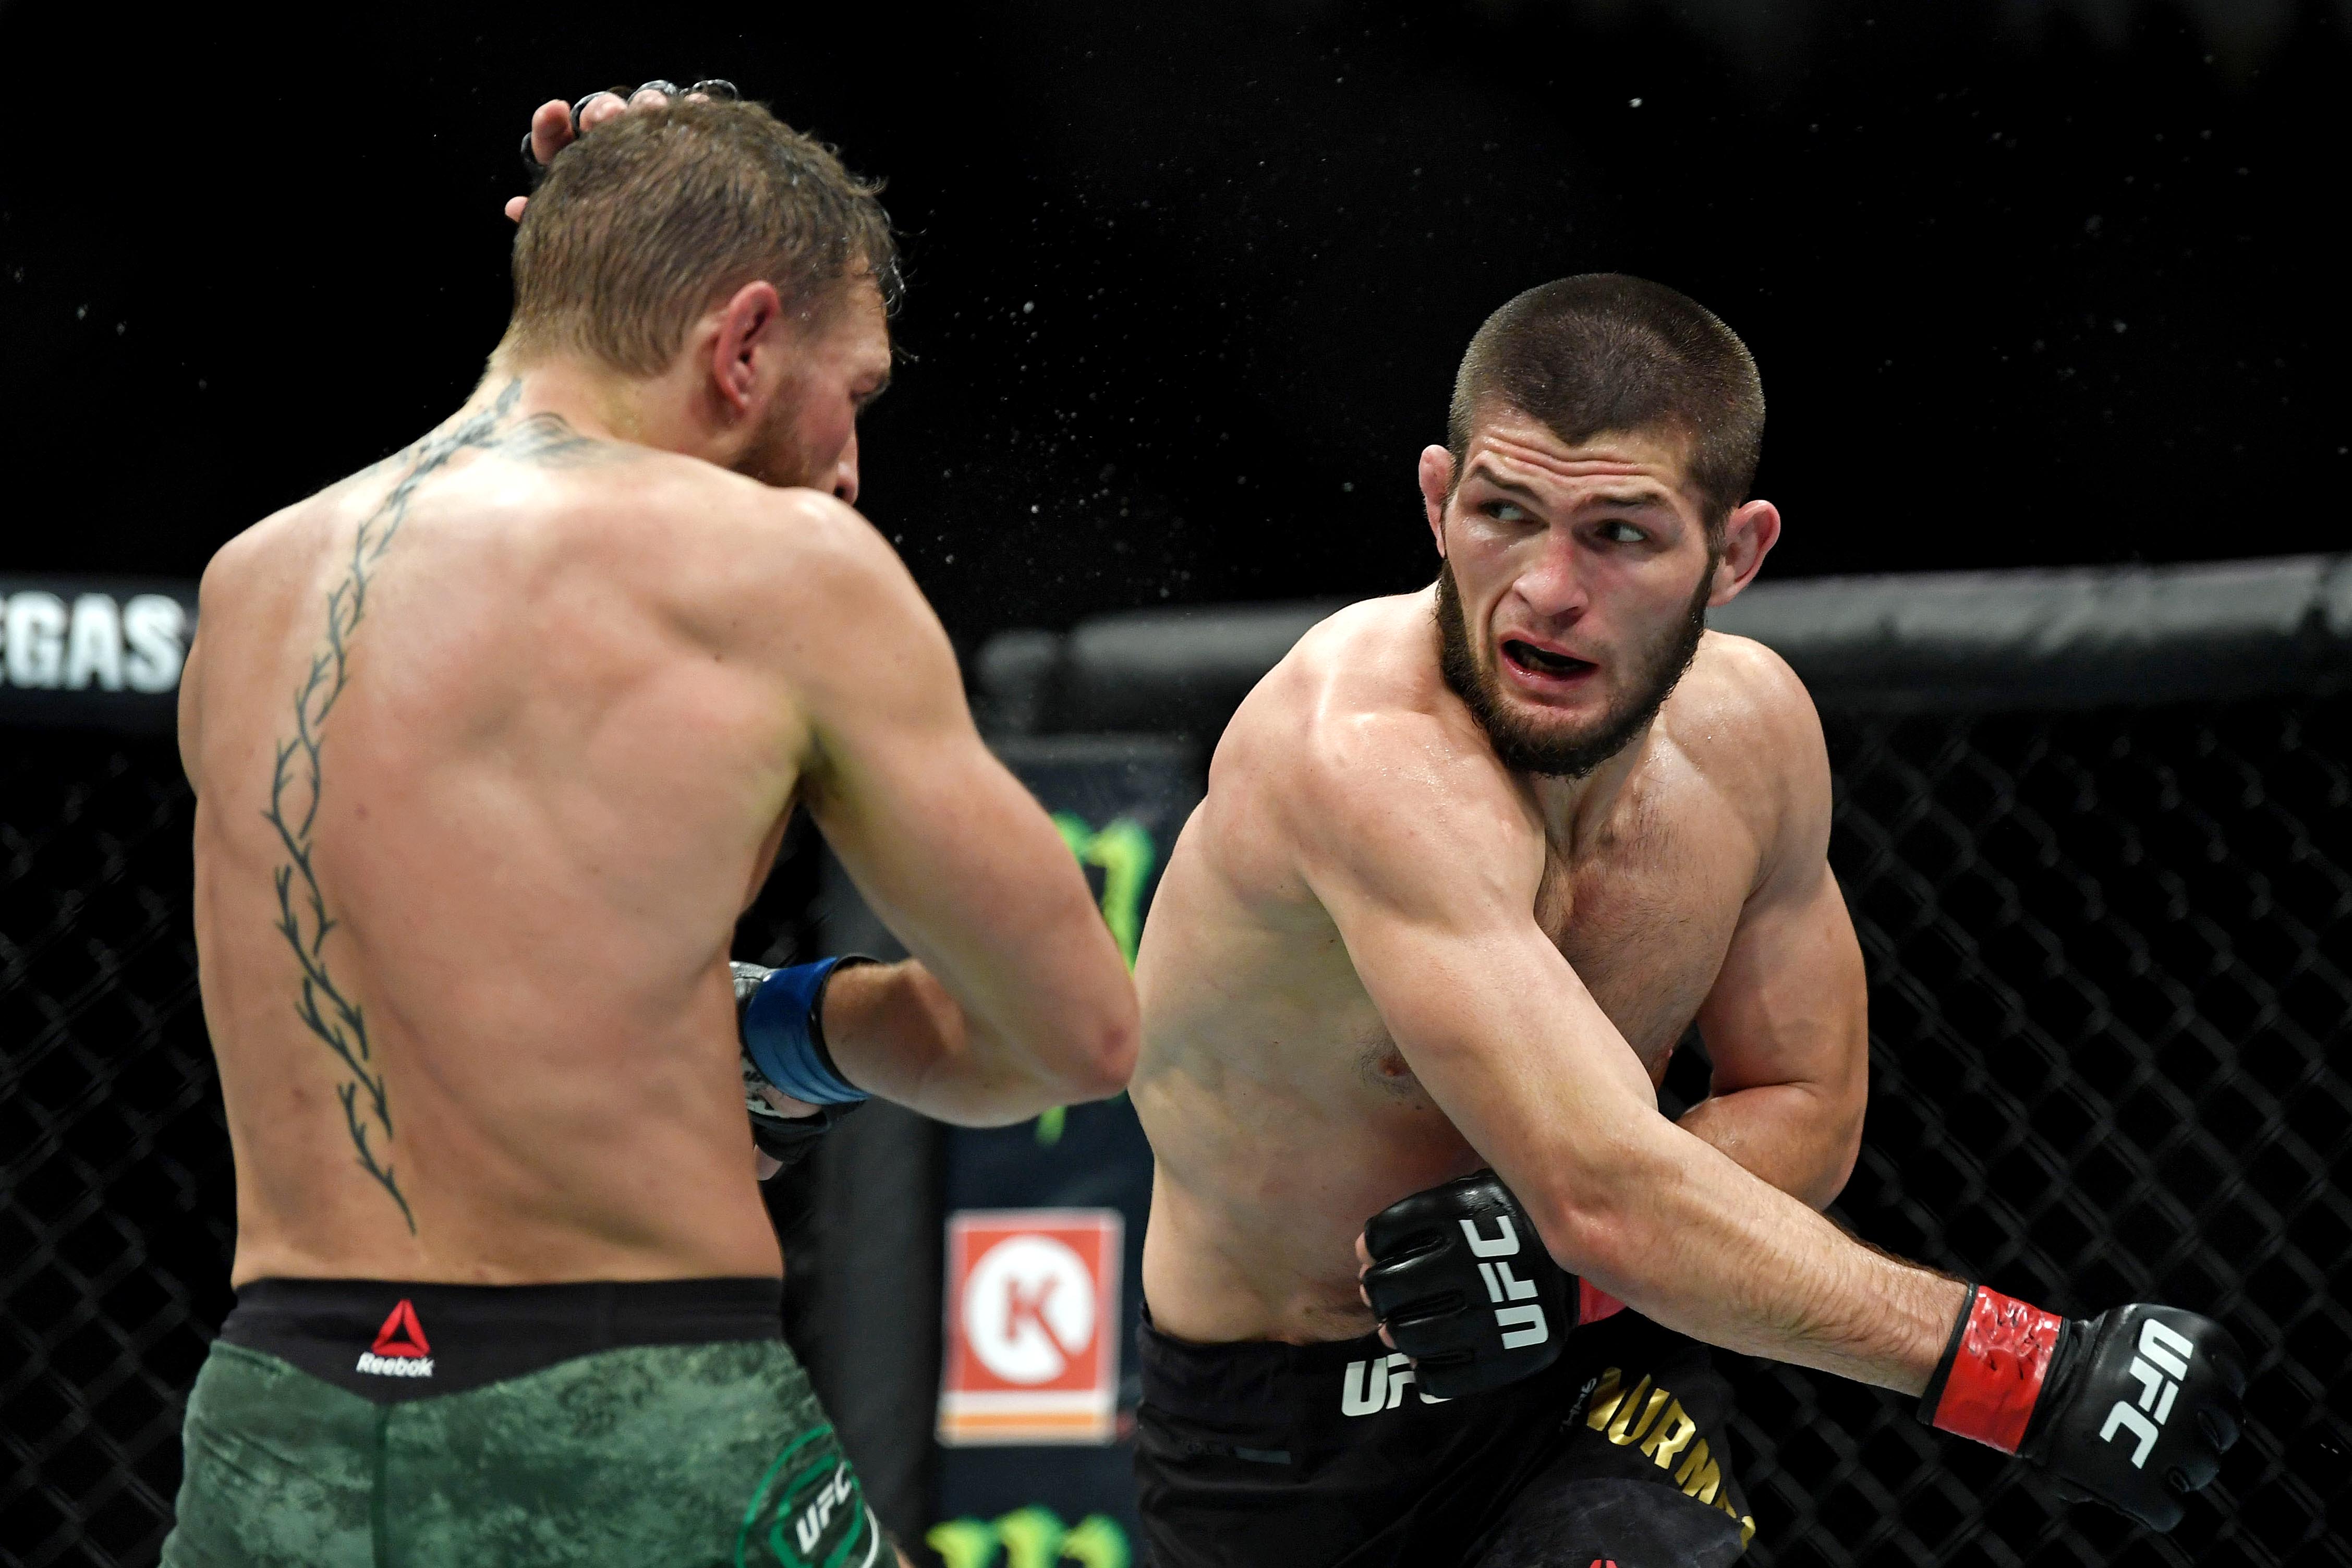 Mixed Martial Arts: Brawls overshadow Khabib's UFC title win over McGregor